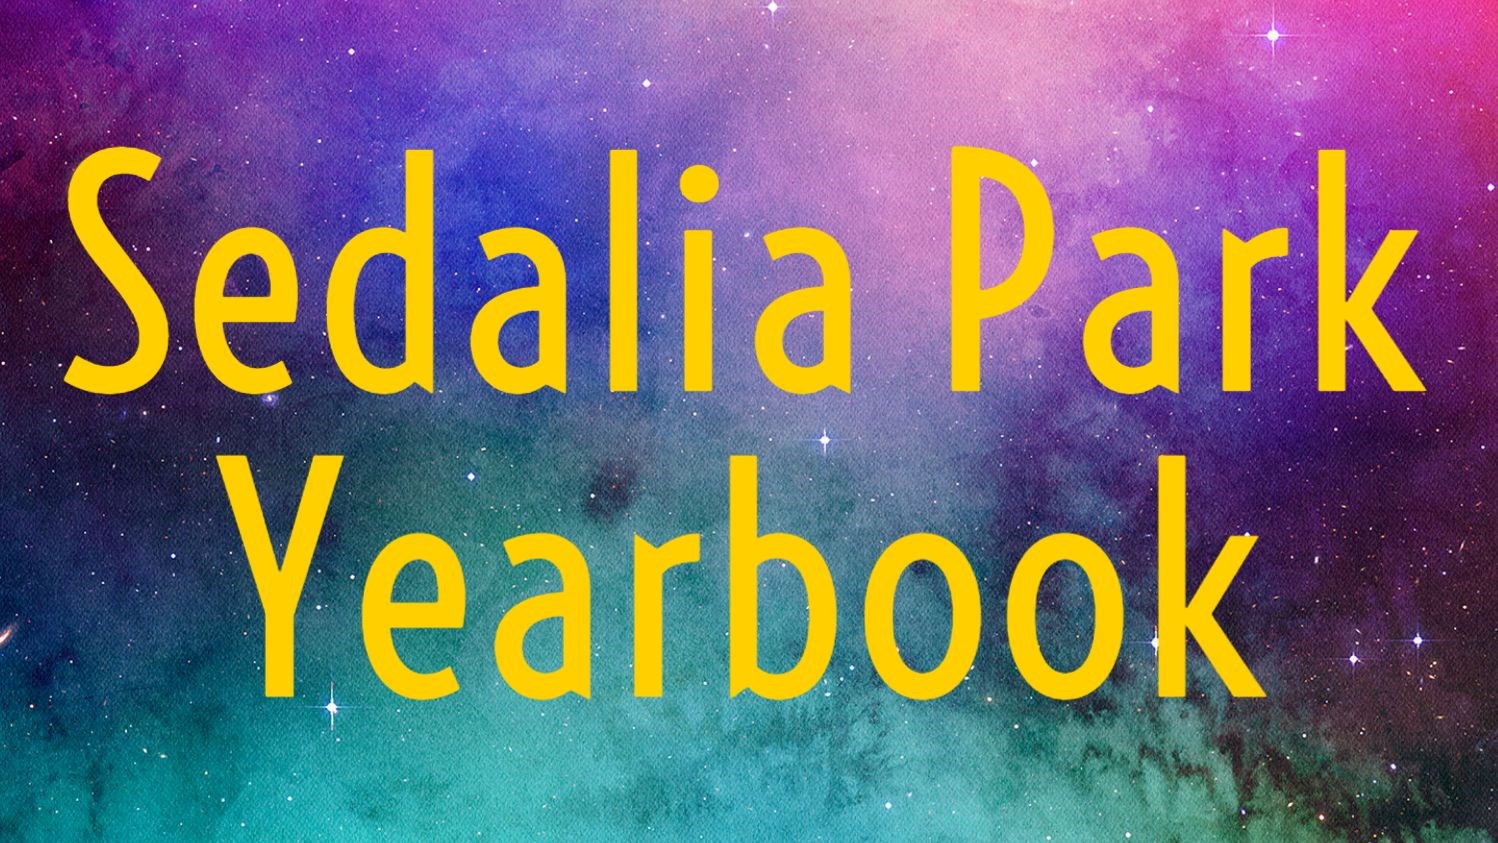 Sedalia Park Yearbook